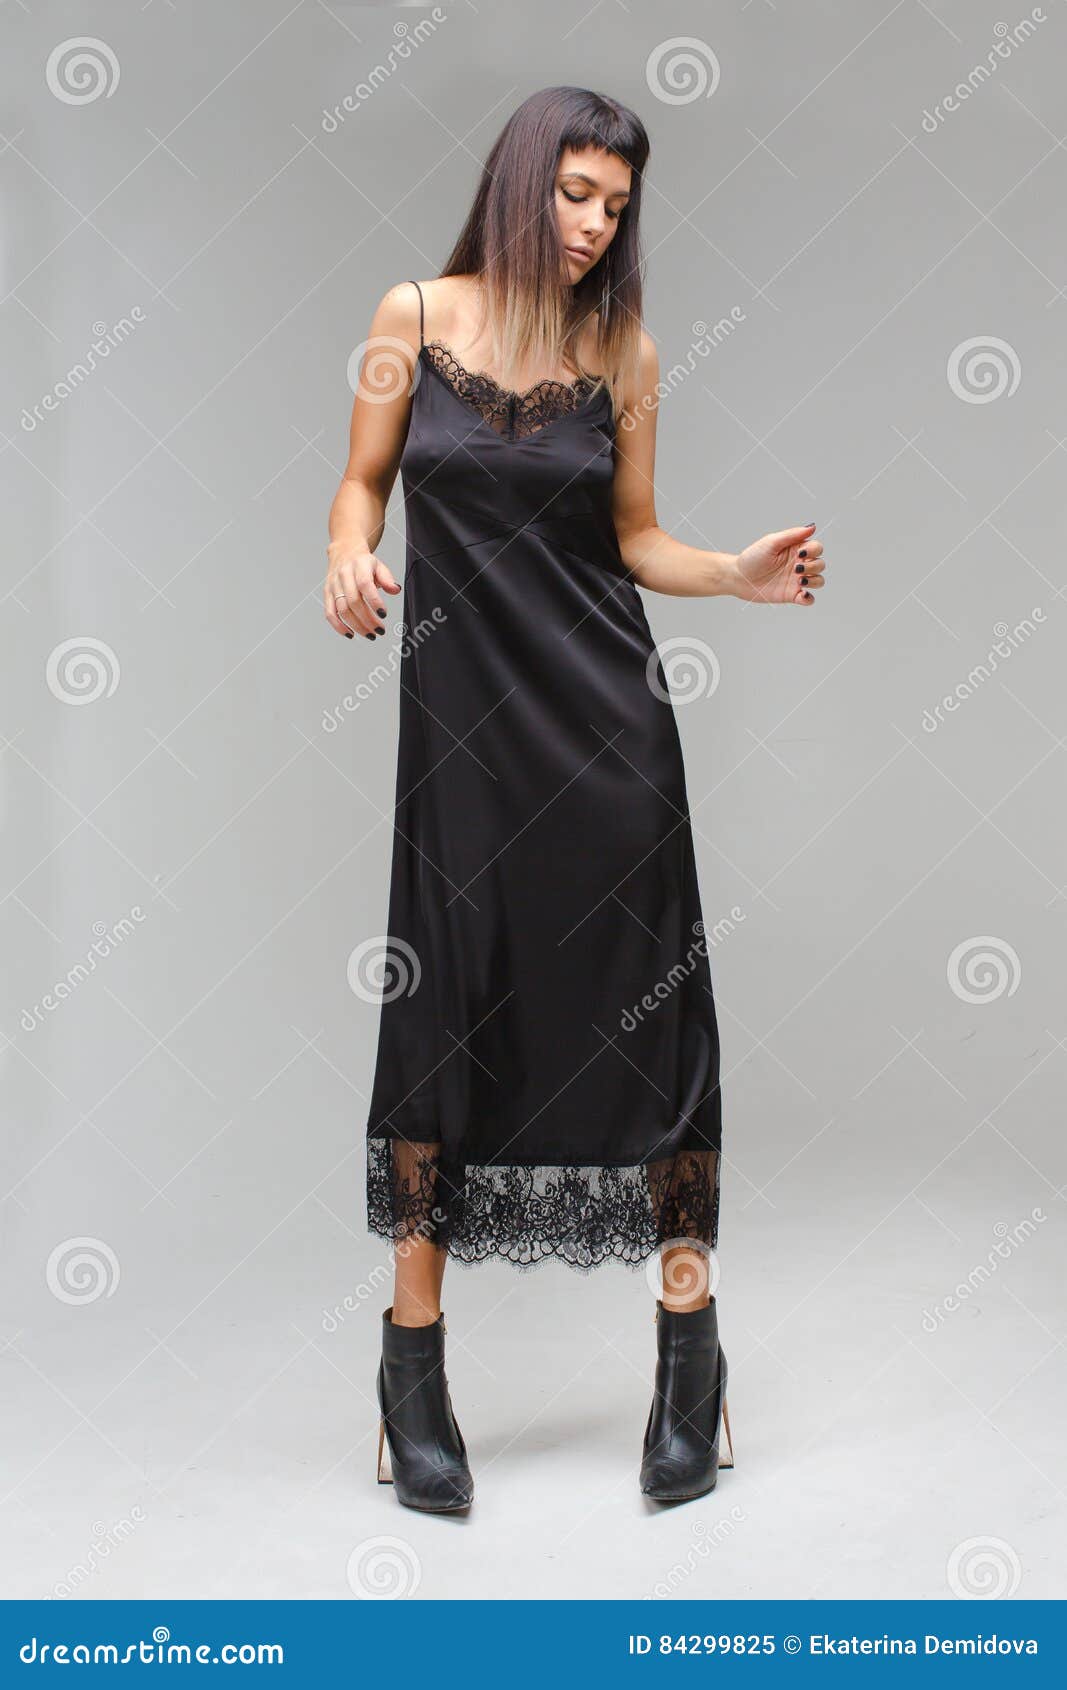 In Black Dress Nightie Underwear Lace Stock Image - Image of lifestyles,  combination: 84299825